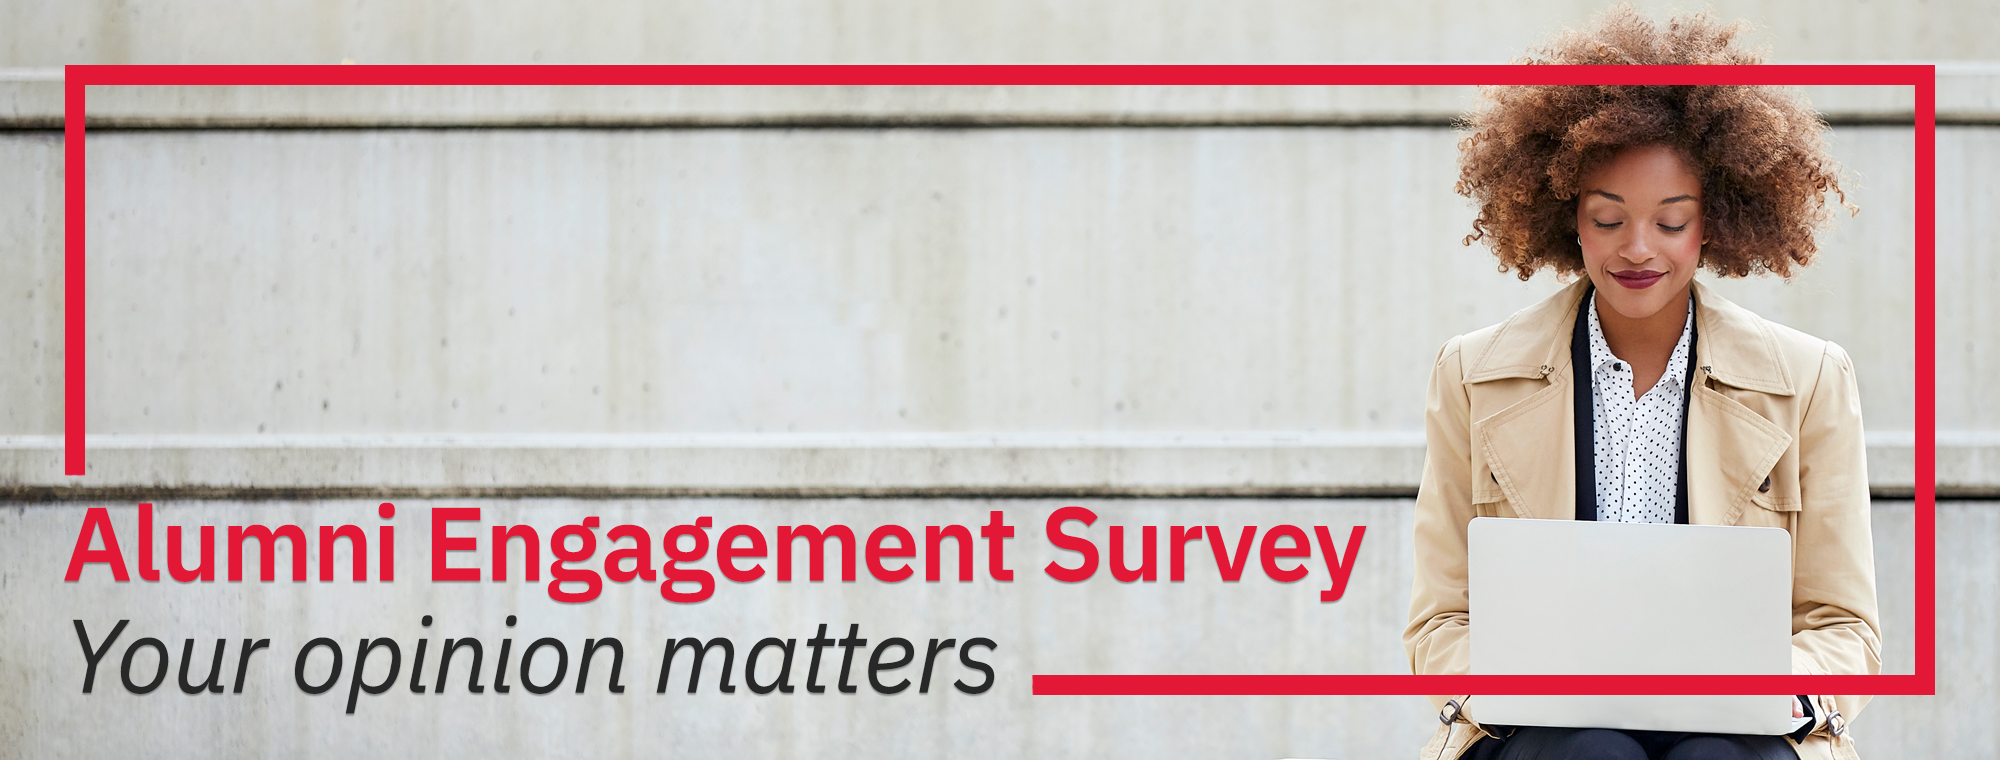 Promotional graphic: Alumni Engagement Survey - Your opinion matters